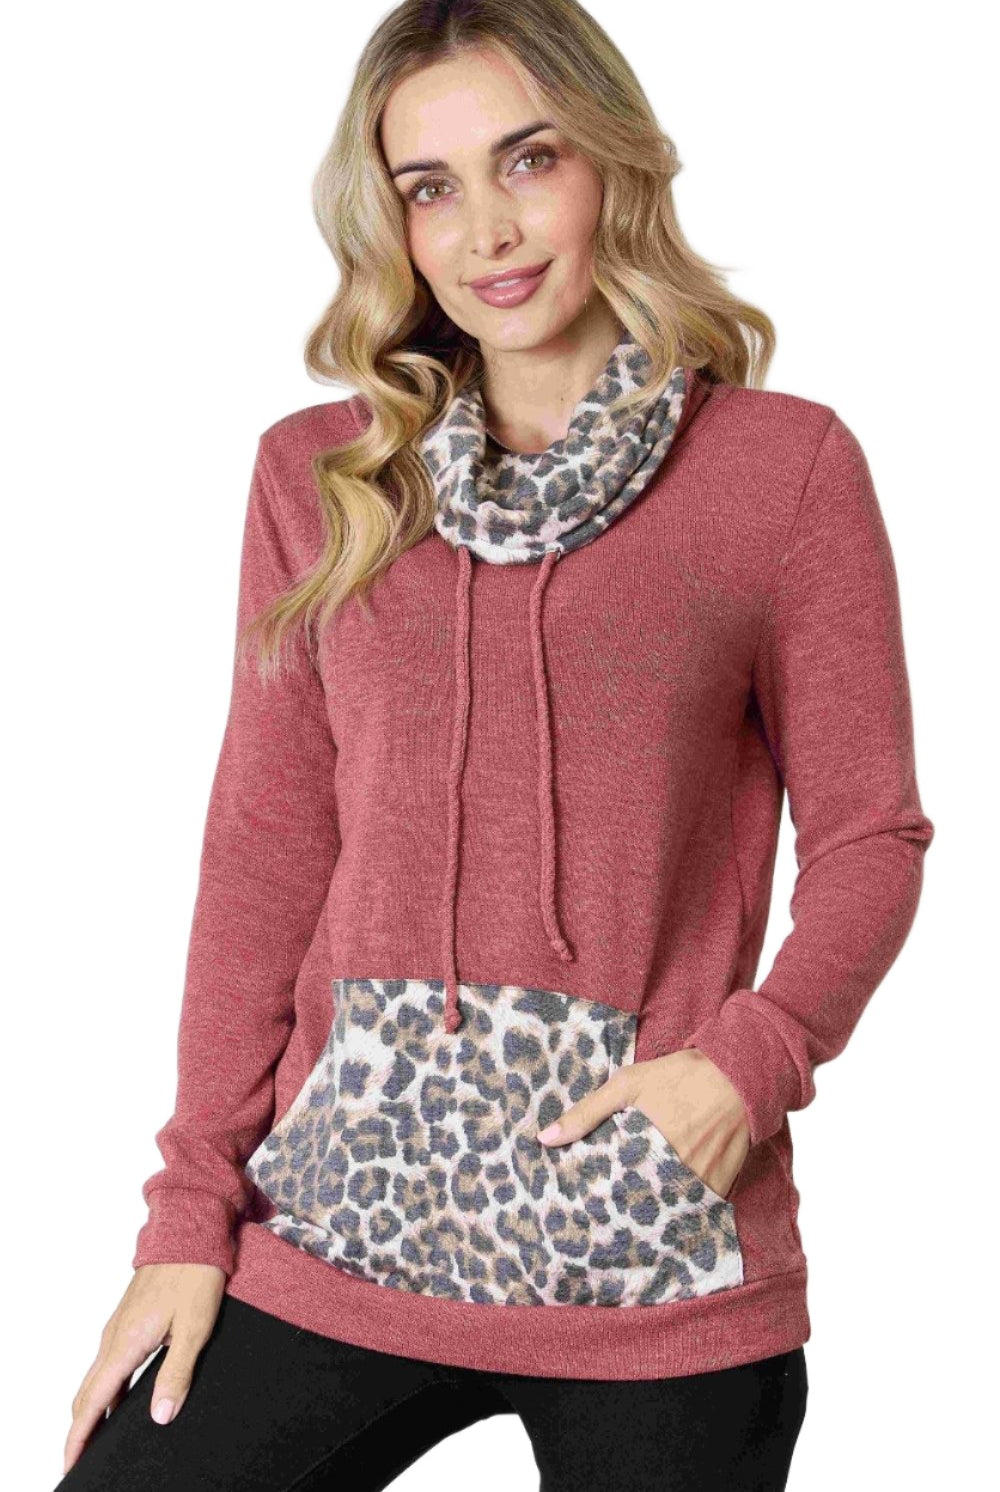 Women's Shirts BiBi Leopard Drawstring Long Sleeve Top